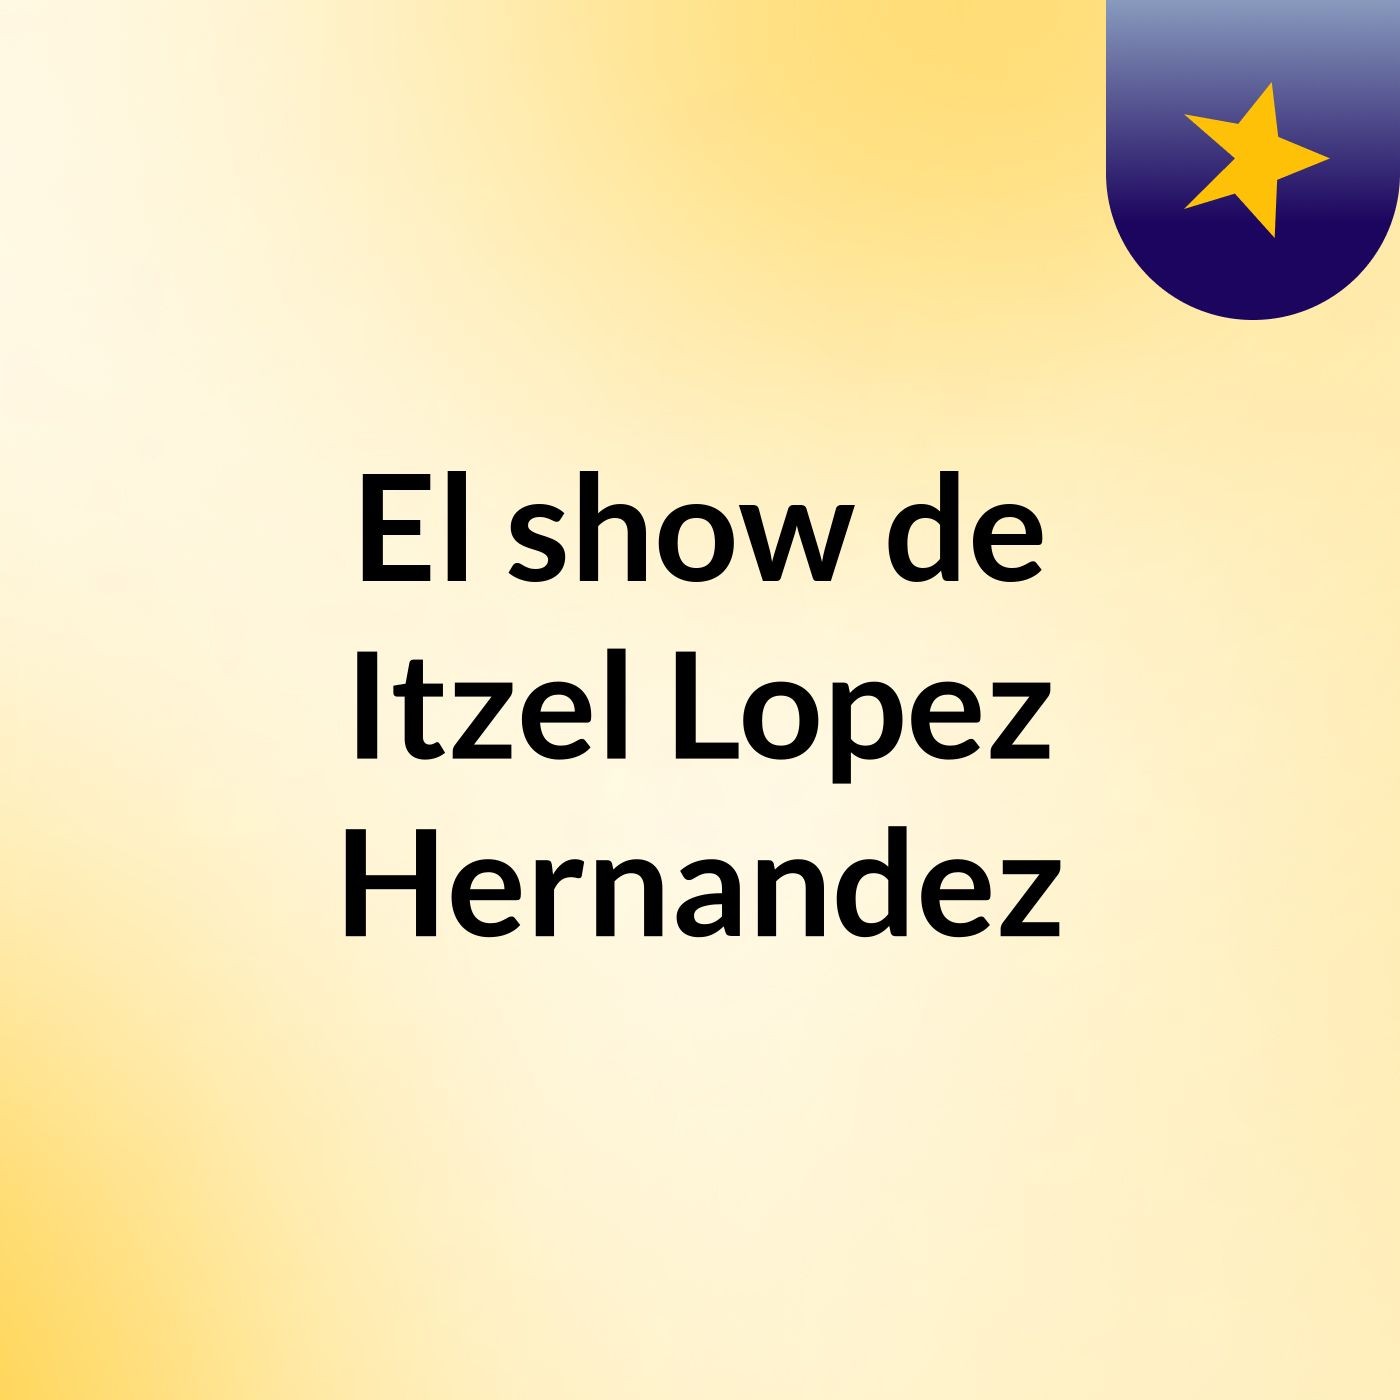 El show de Itzel Lopez Hernandez